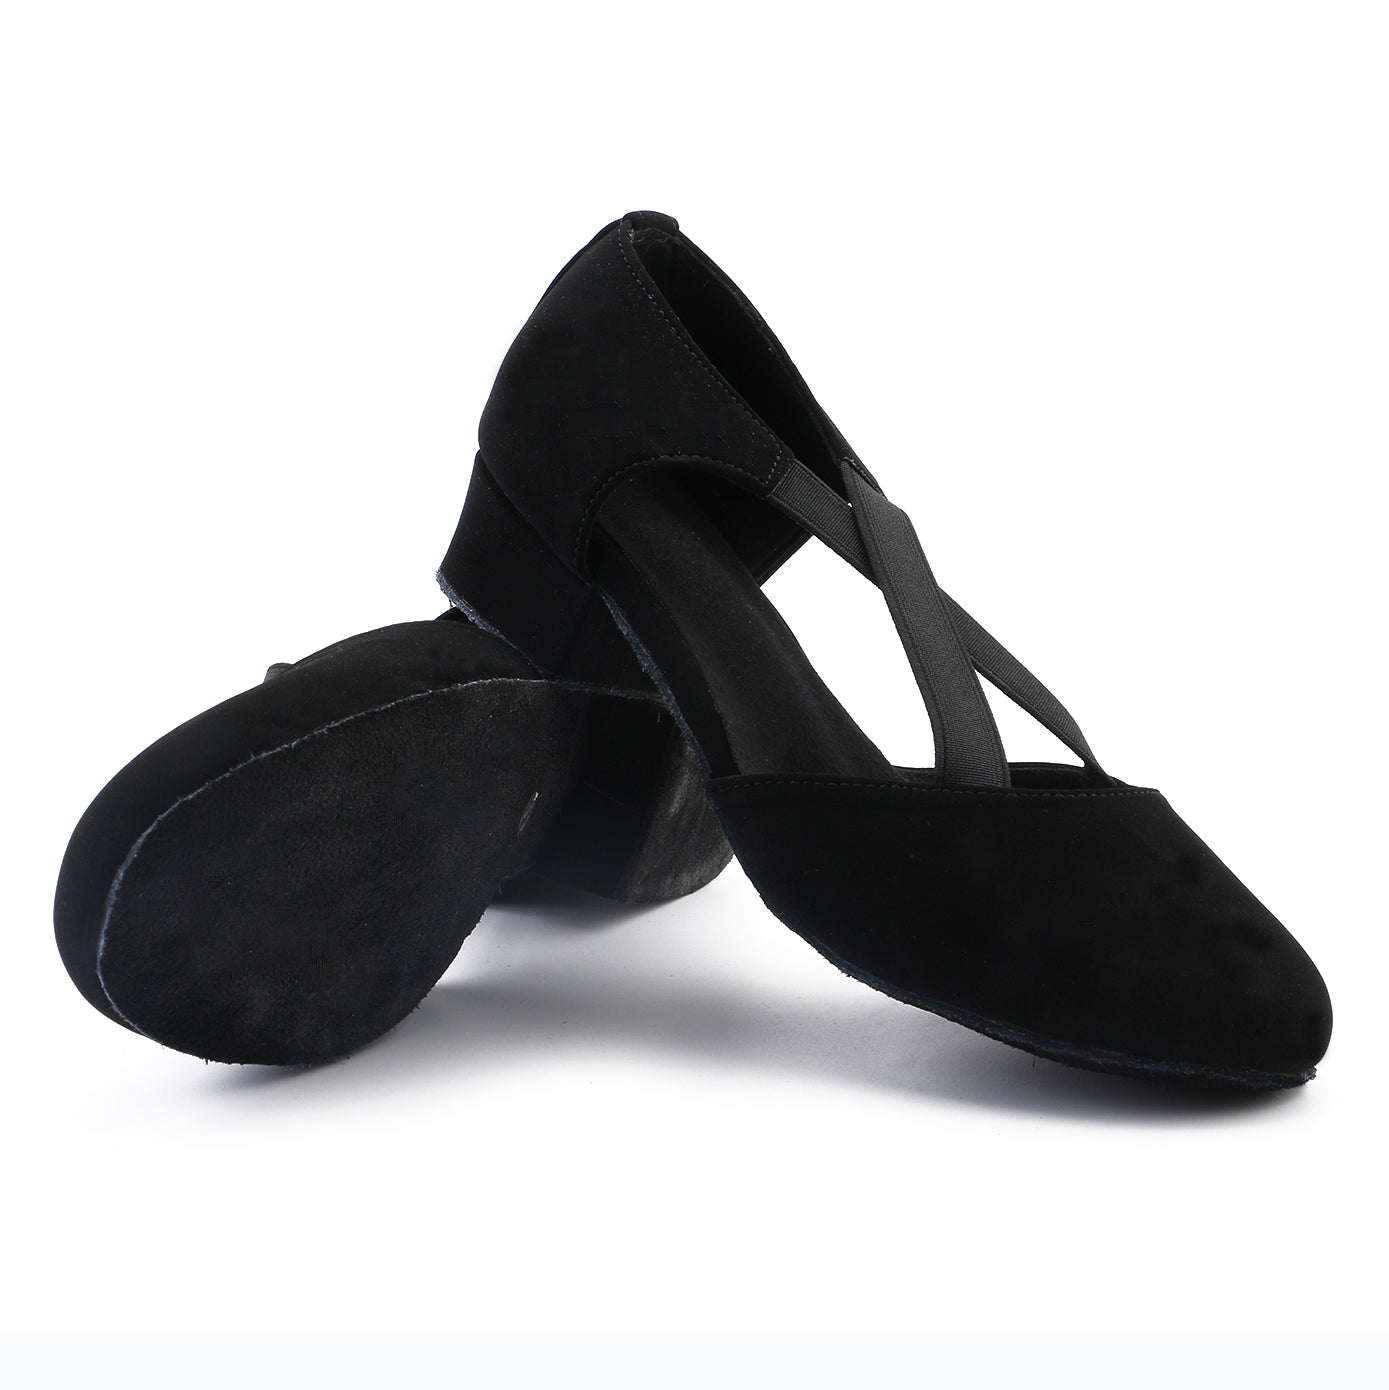 Low Heel Ballroom Dancing Shoes Ladies Tango Latin Practice Dance Shoe for Women Suede Sole Closed-toe Black (PD7307B)